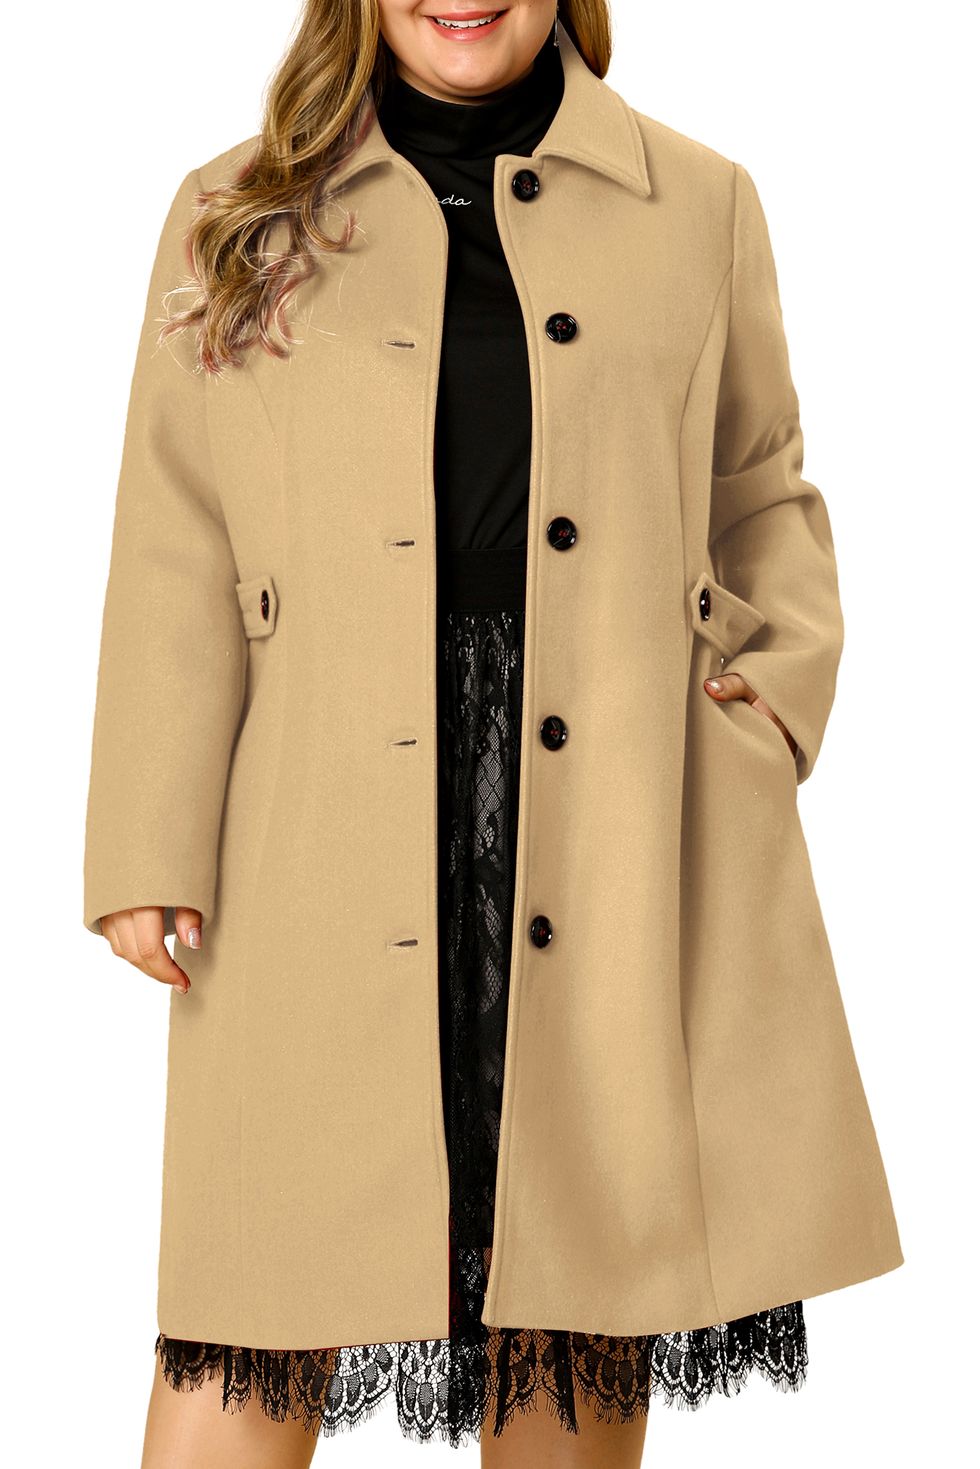 0: Women's Plus-Size Winter Coats